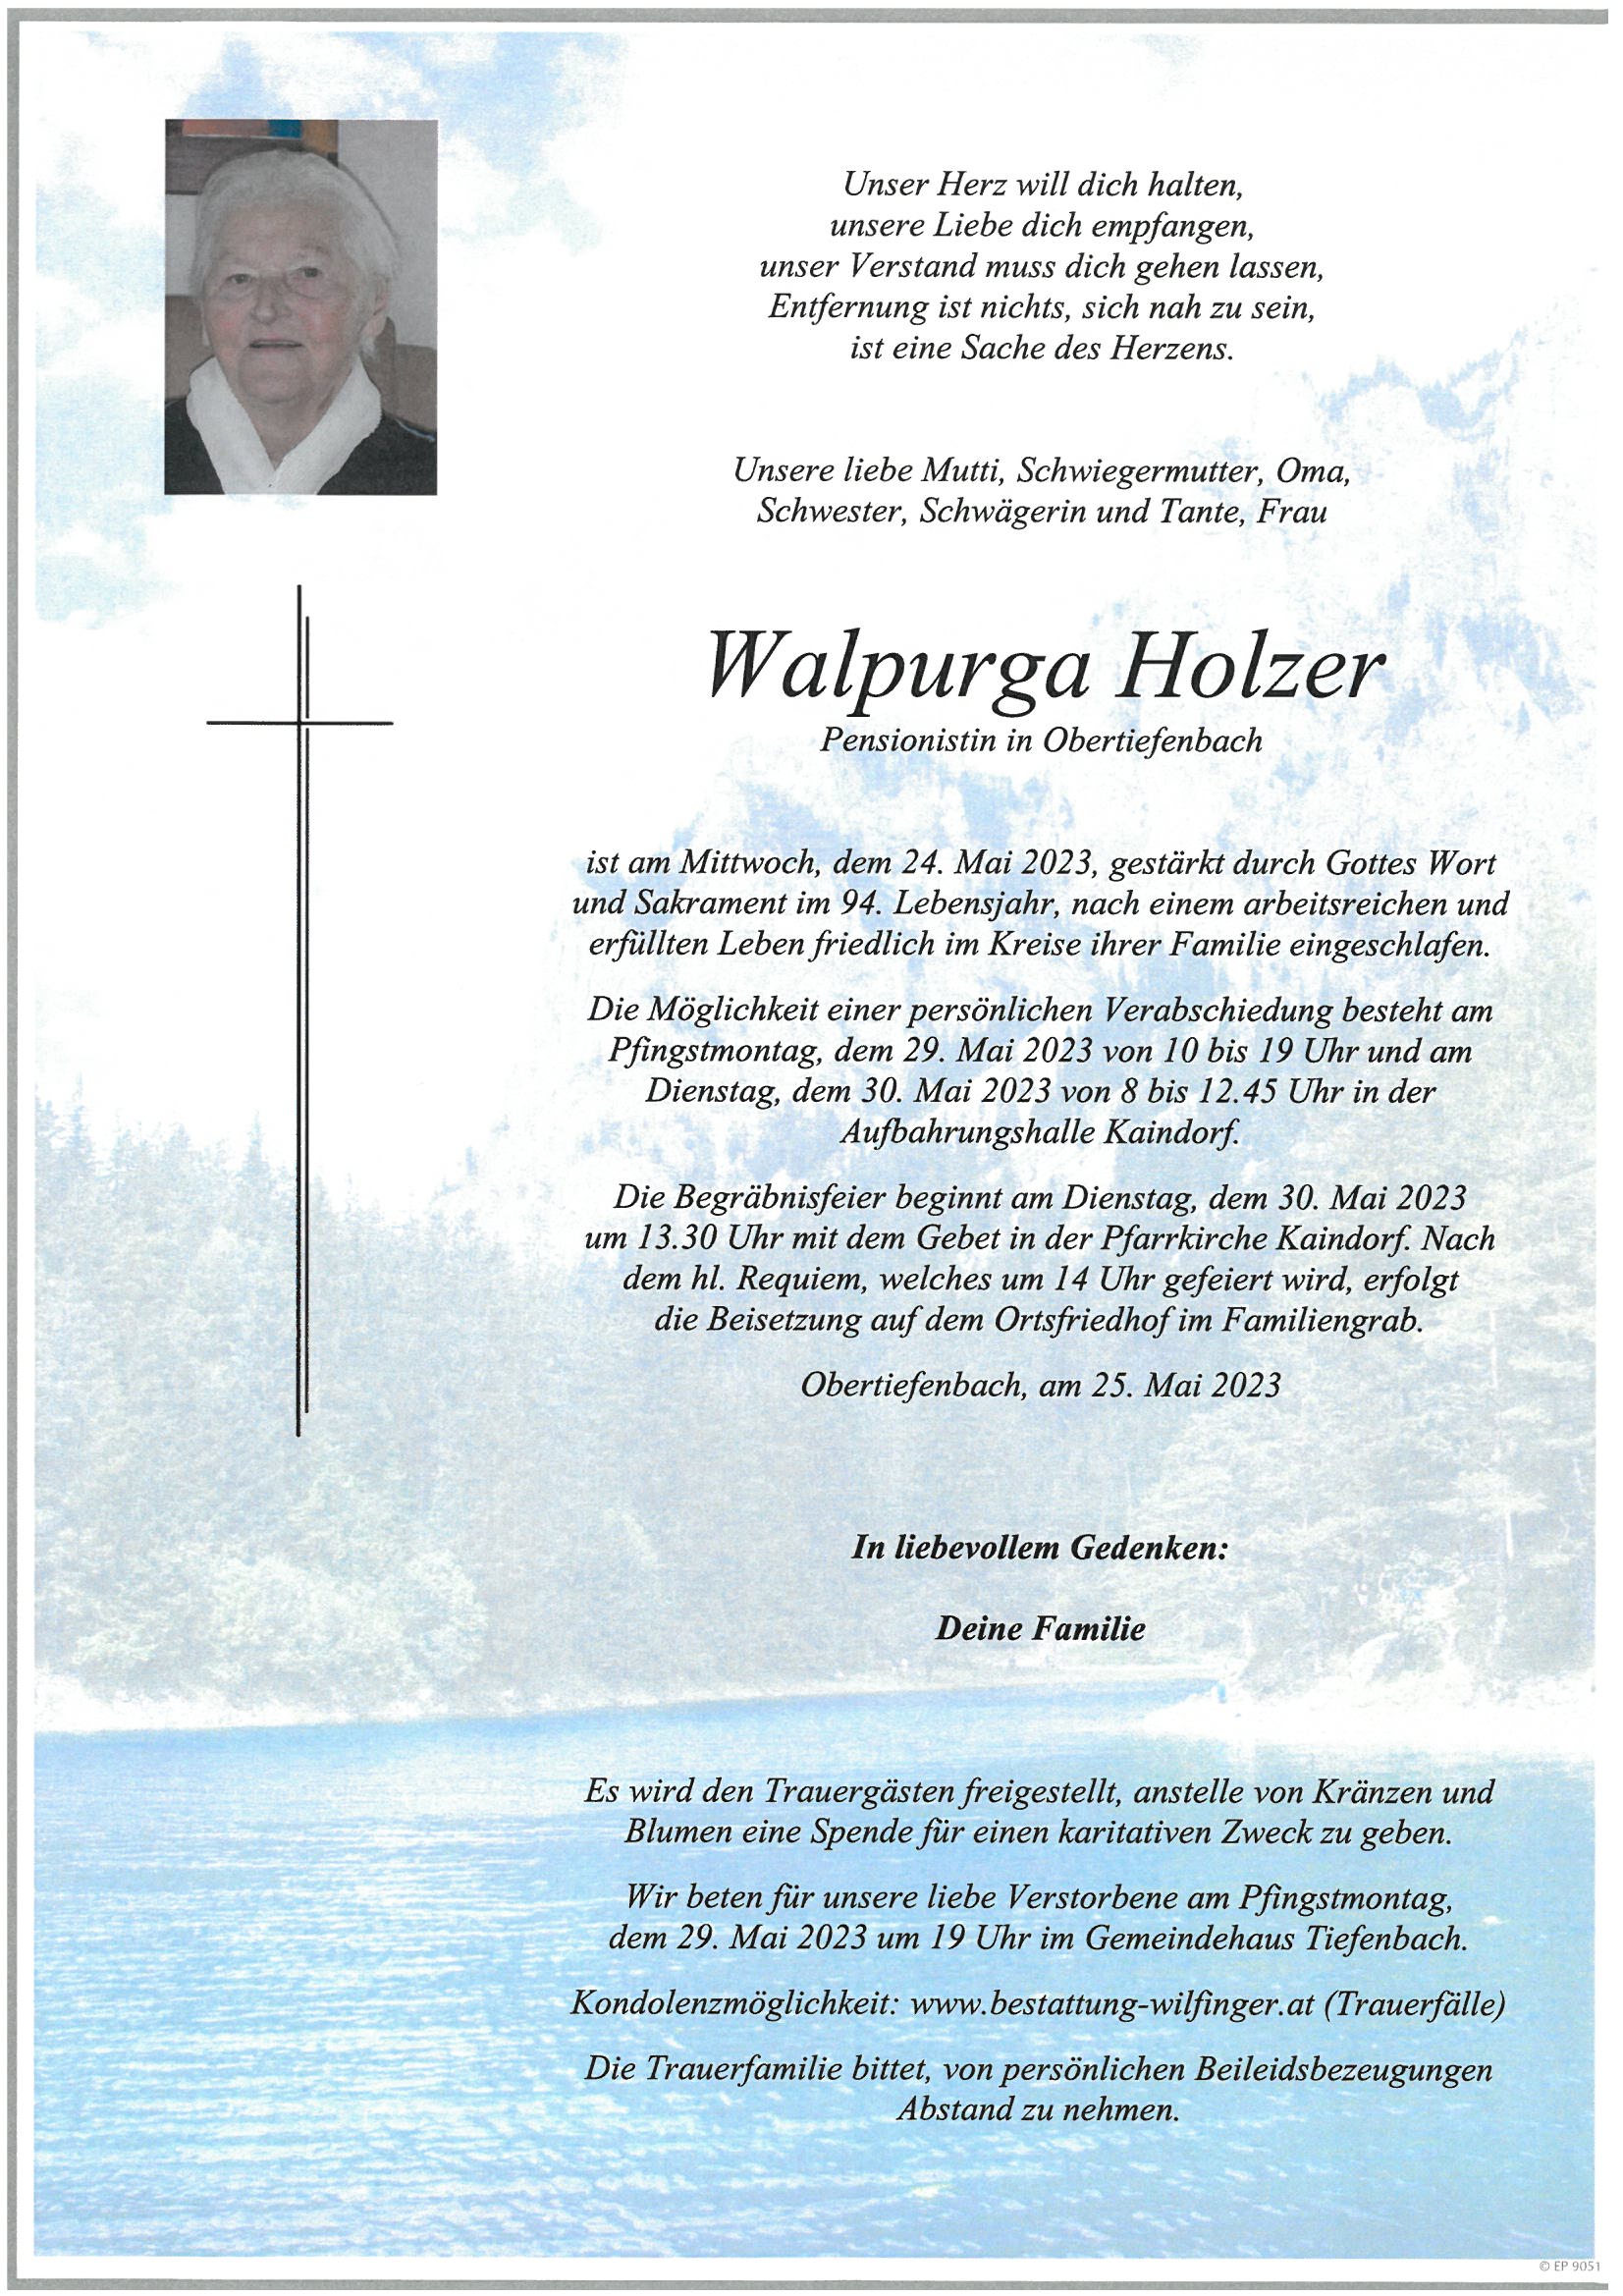 Walpurga Holzer, Obertiefenbach